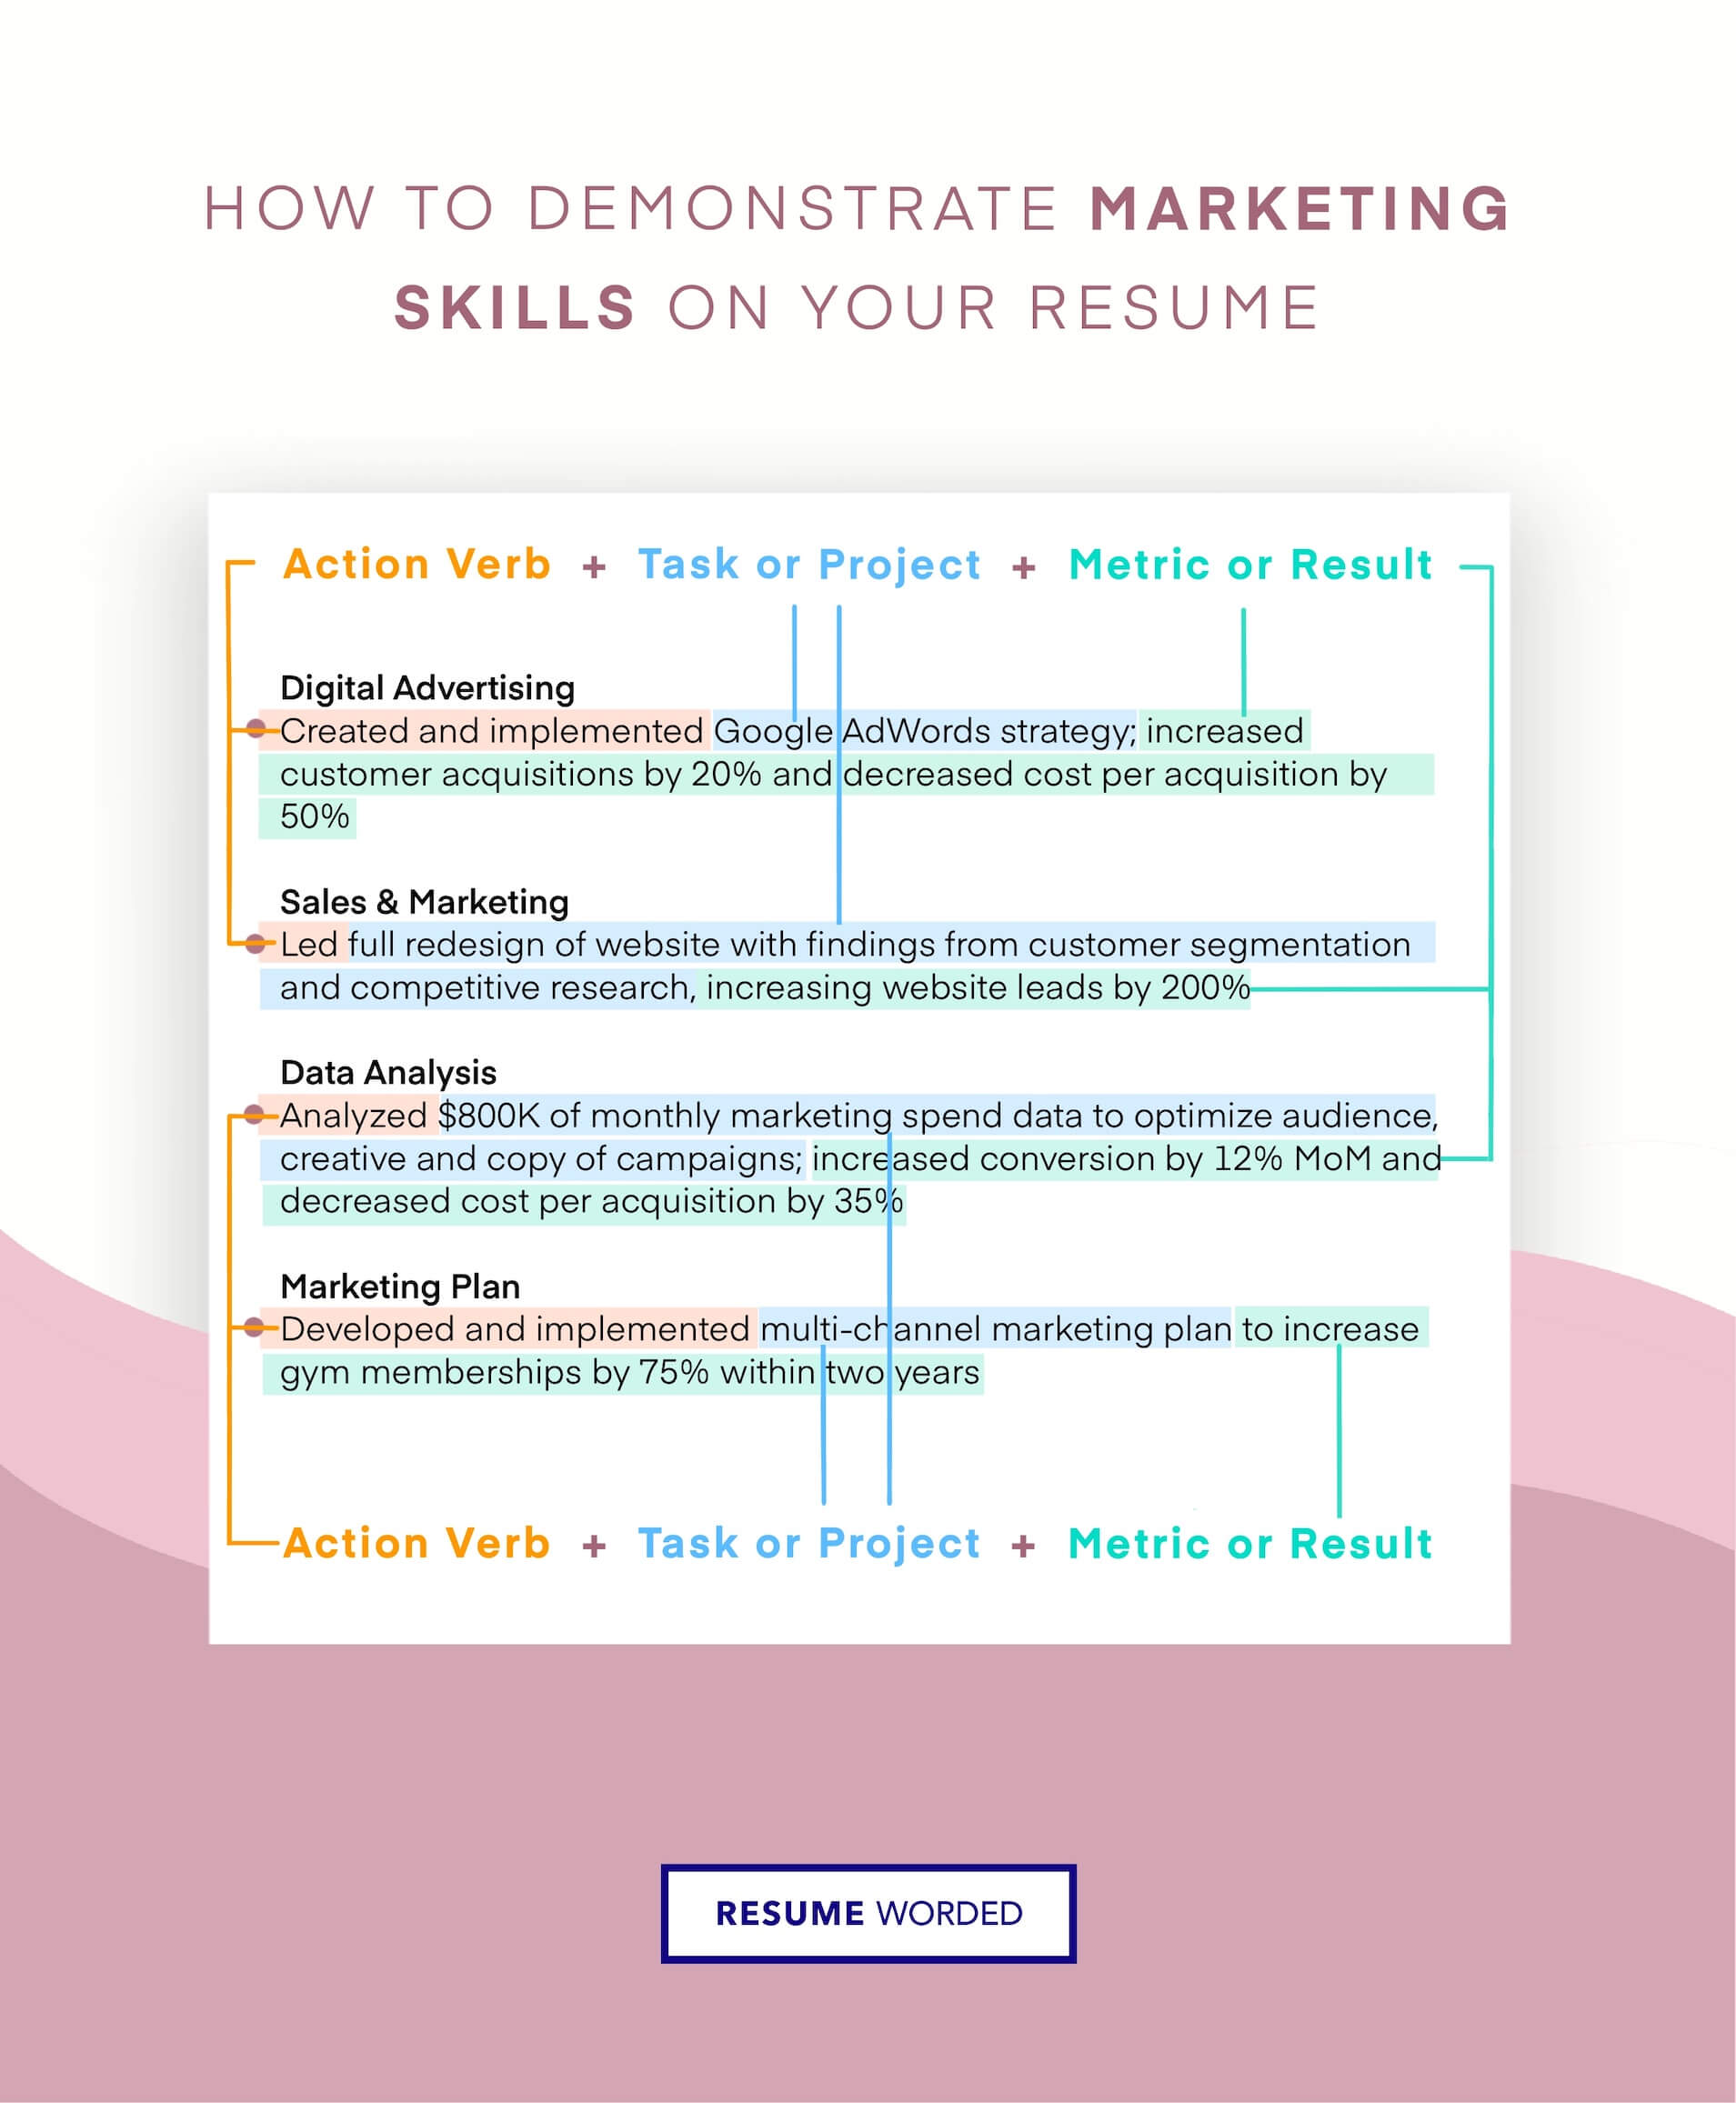 Emphasize marketing and data skills - Marketing Data Analyst Resume